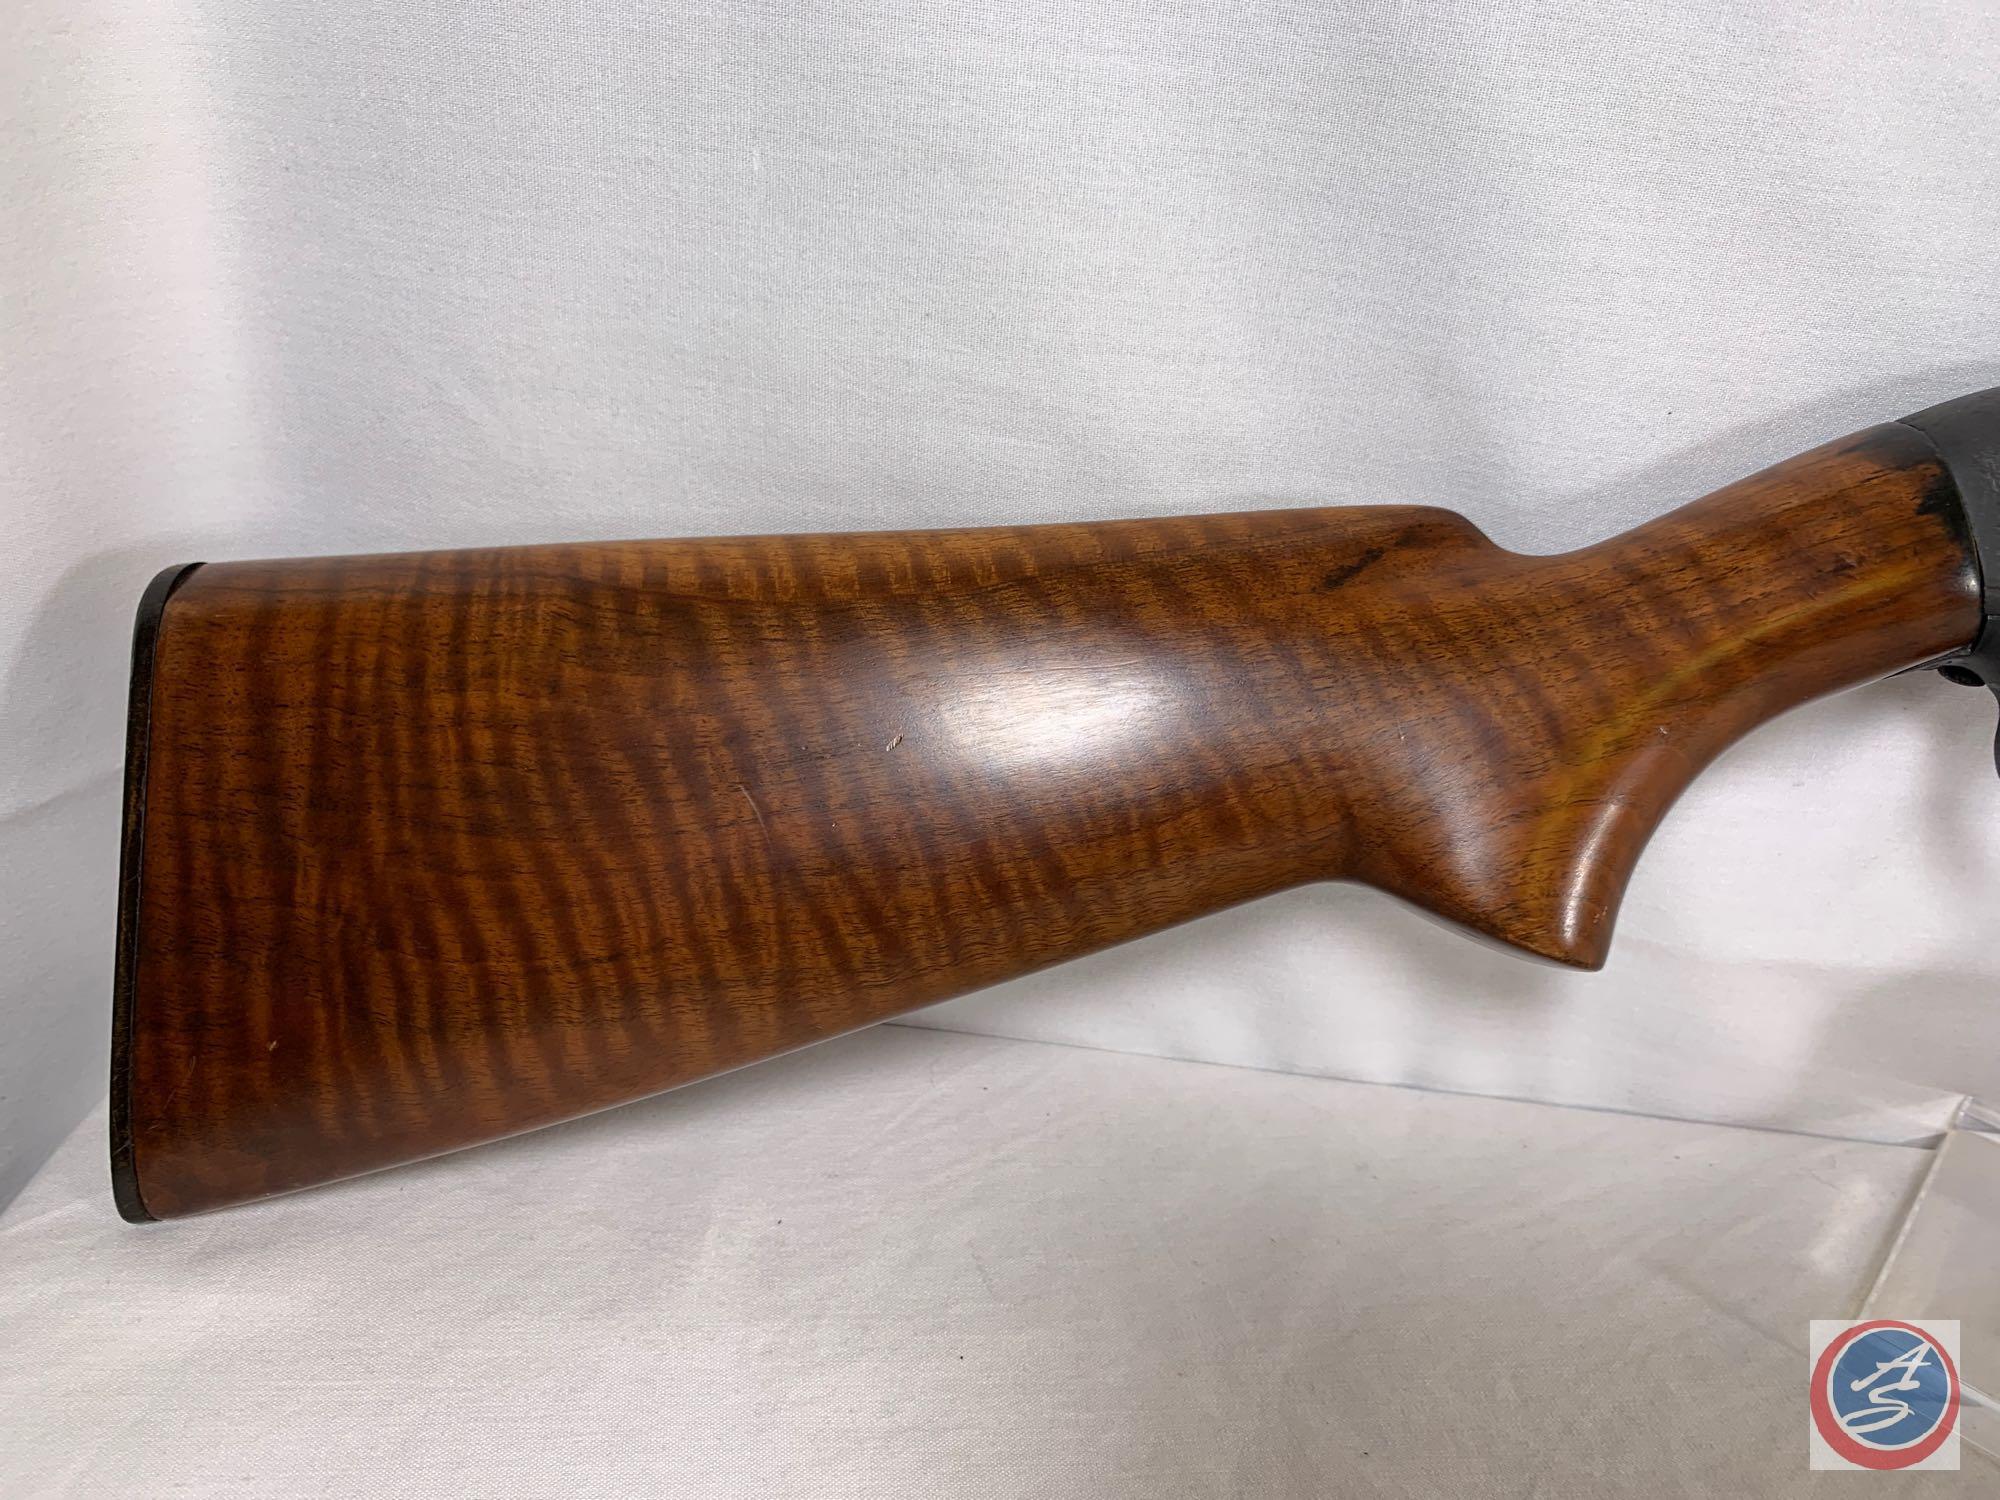 Winchester Model 12 12 GA Shotgun Pump Action Shotgun. Heavily pitted barrel and receiver. clean